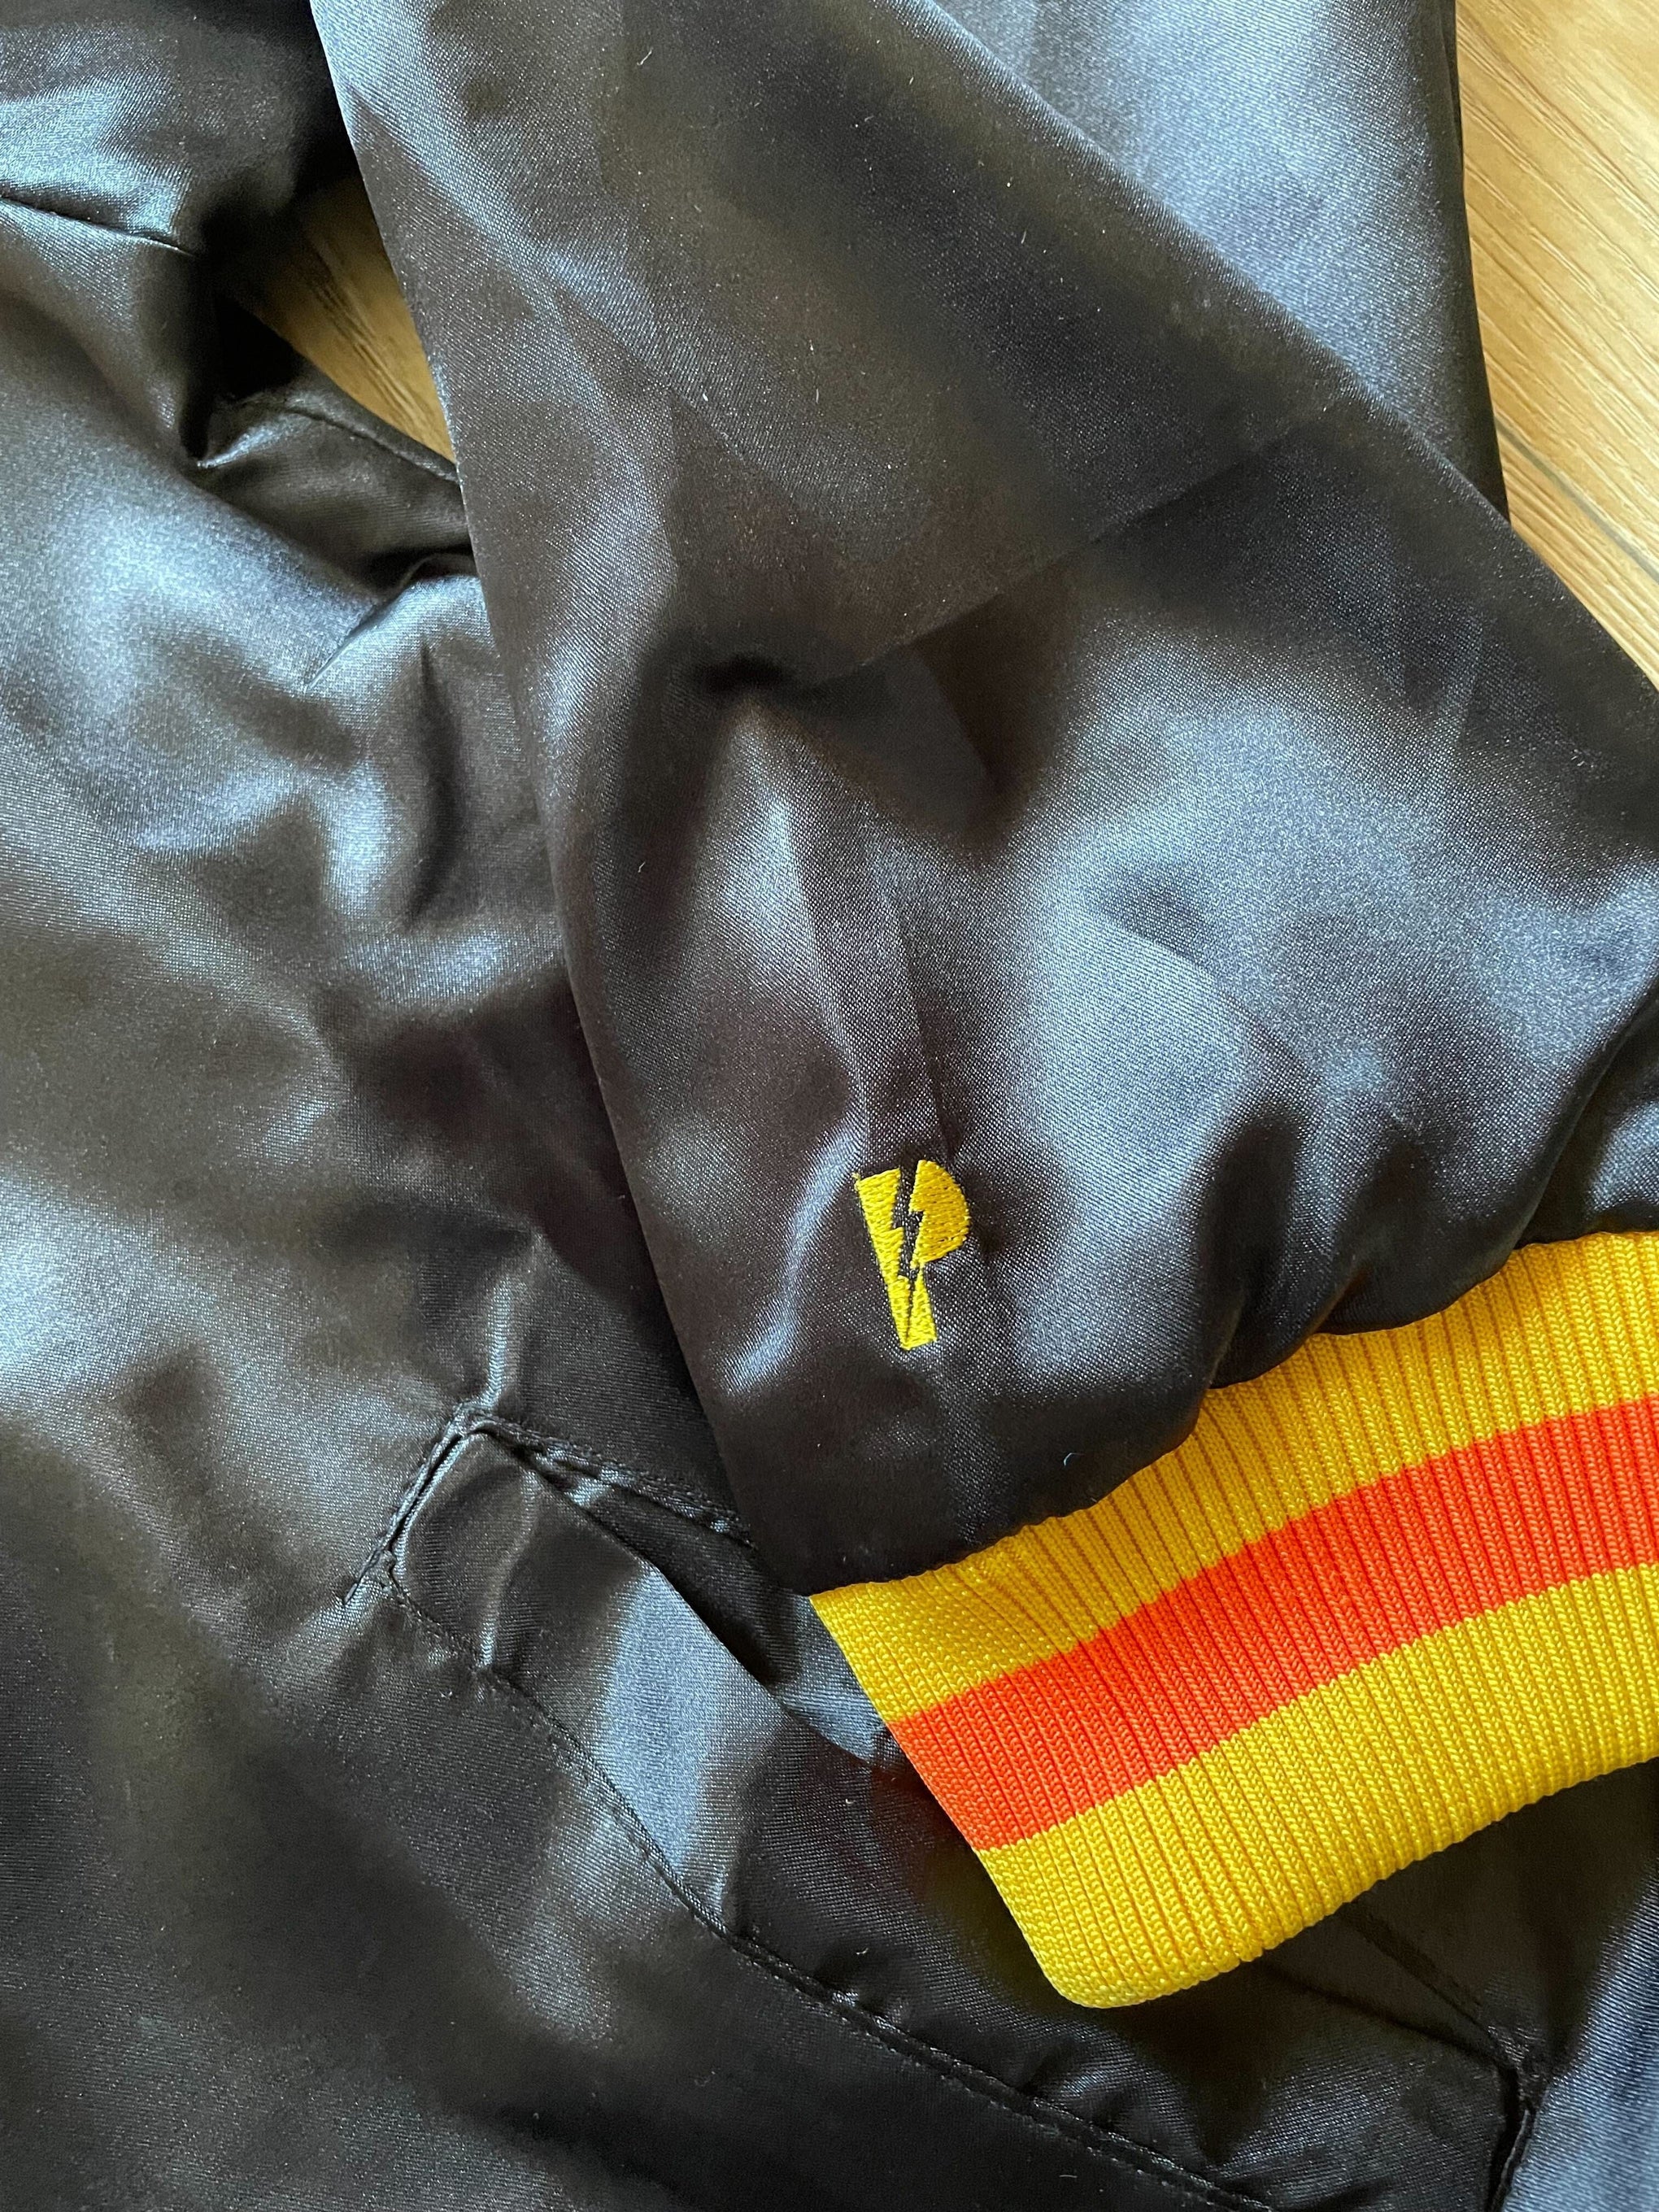 Black Satin Baseball Jacket with Yellow Pockets and Knit Lines